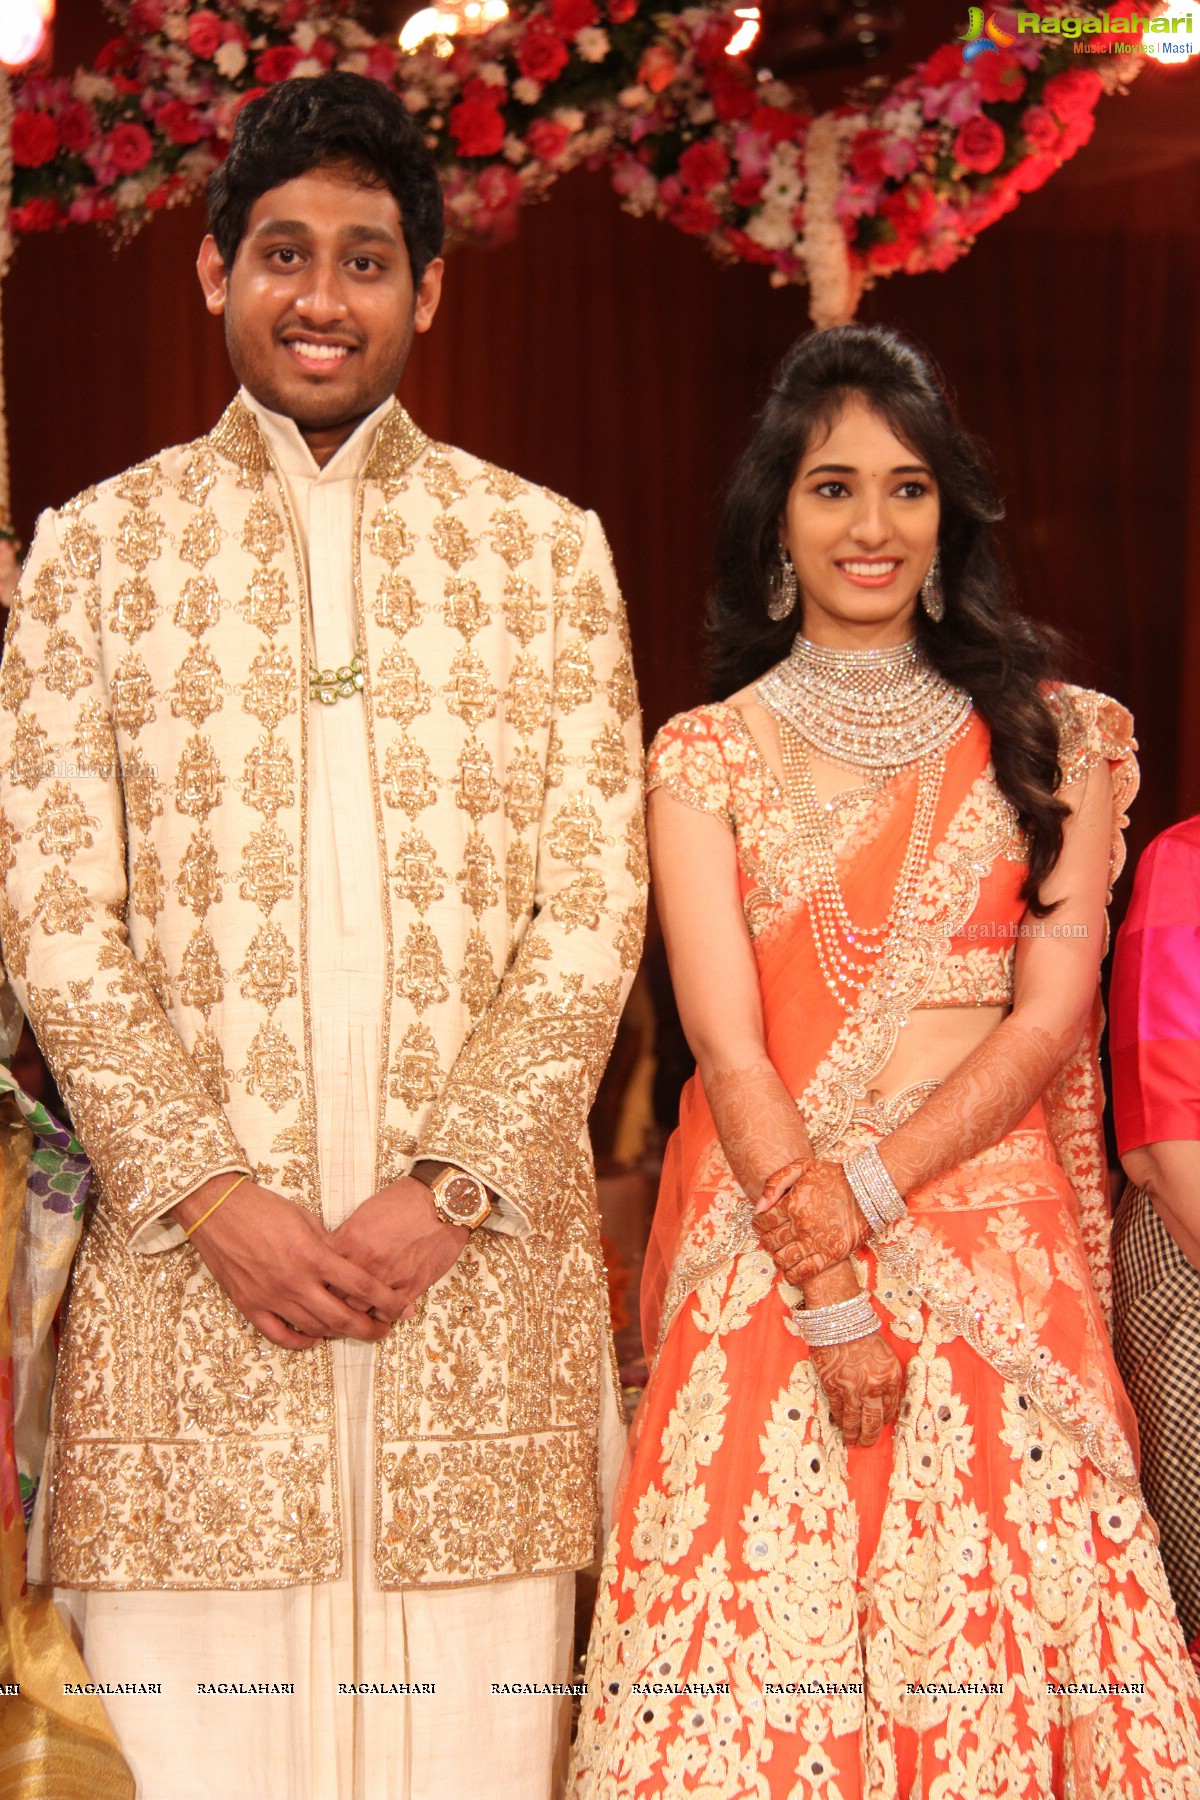 Wedding Enagement Ceremony of Manisha-Abhinav